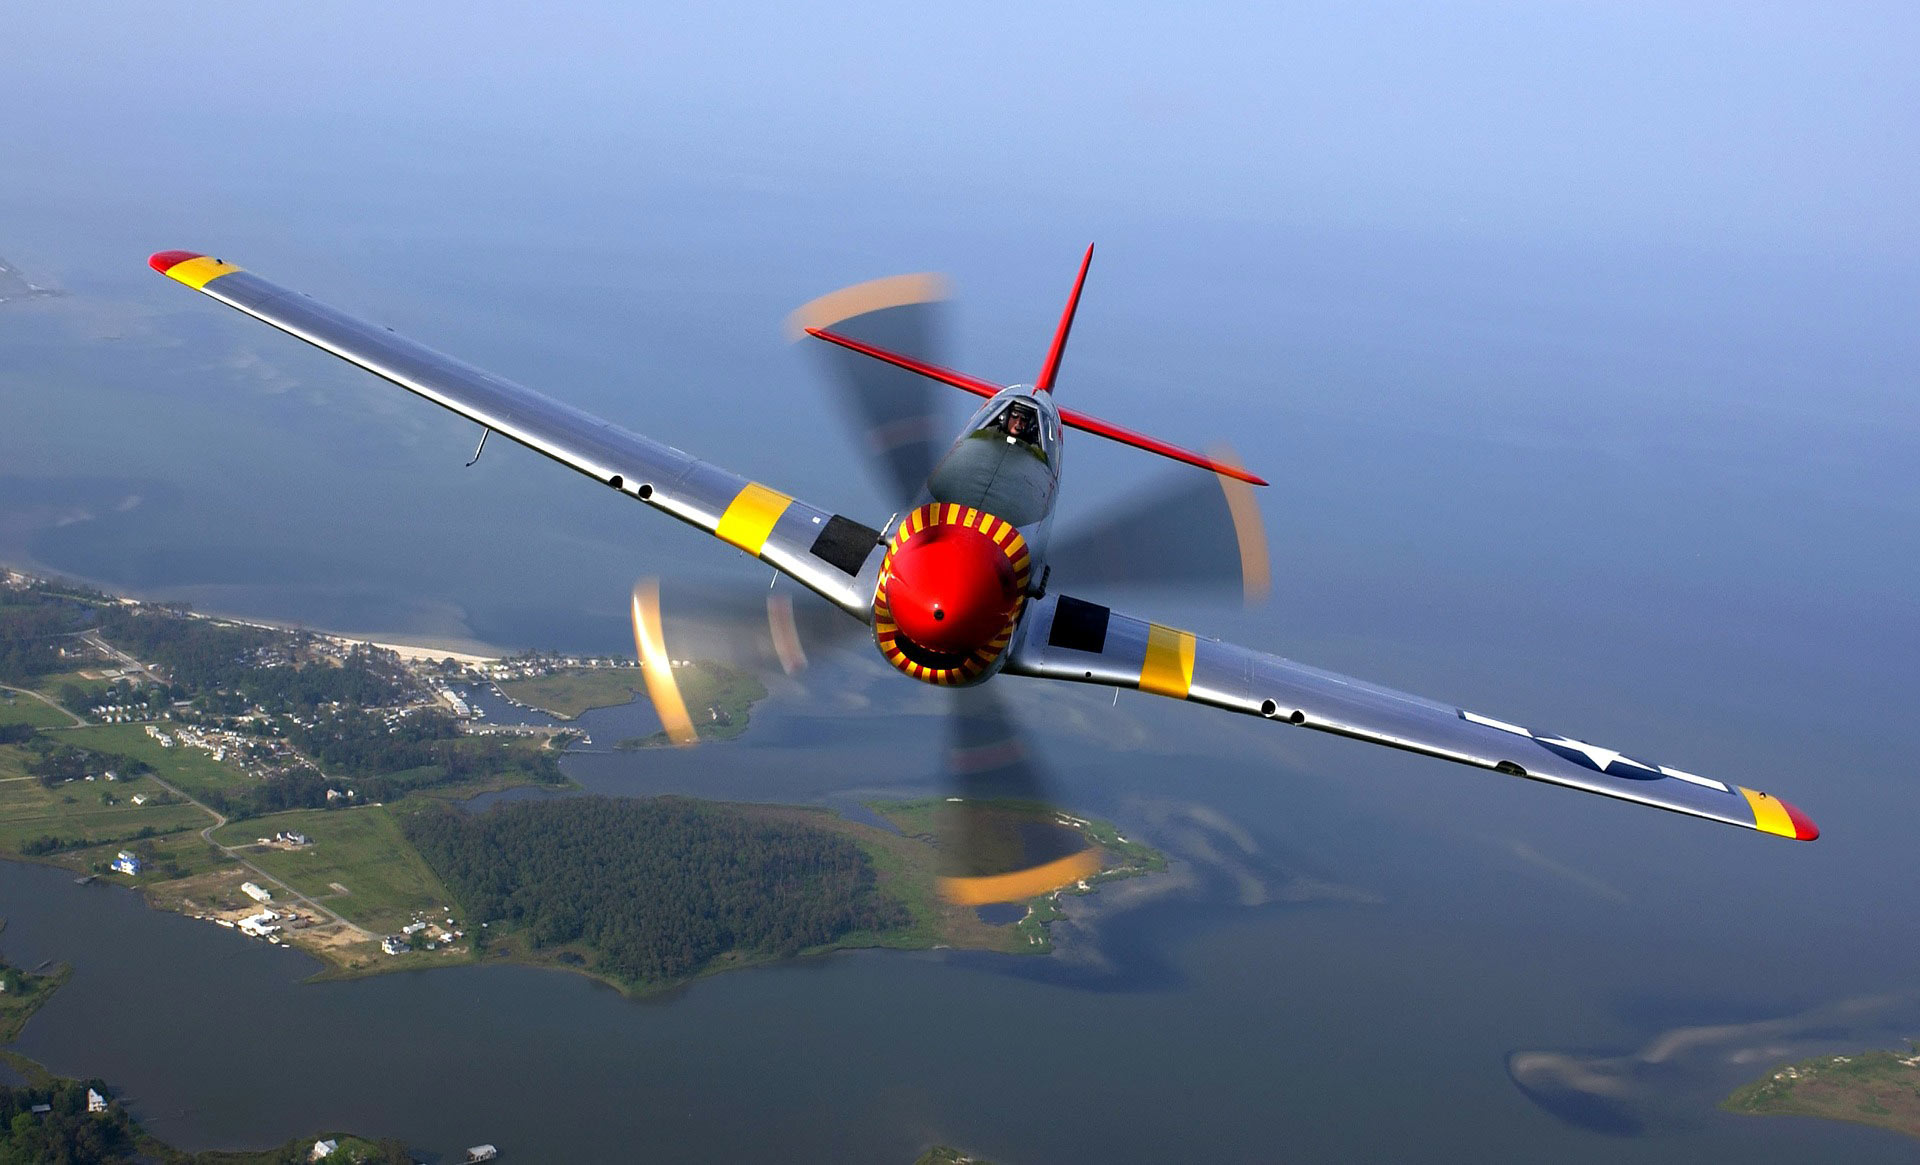 Plane: aerobatic aircraft